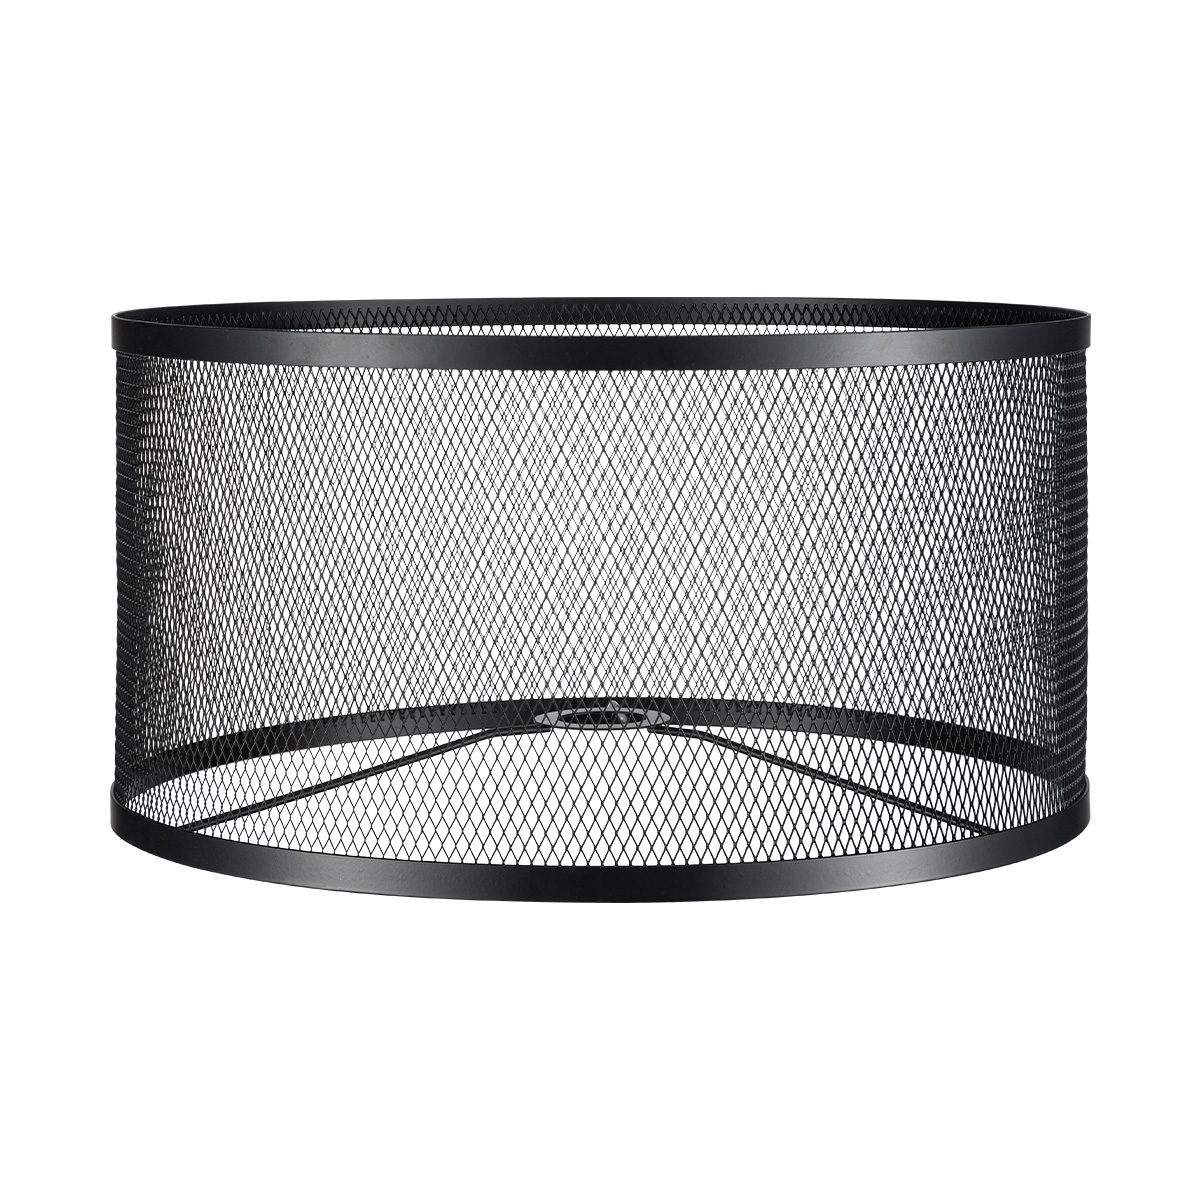 Tangla lighting - TLS7646-45BK - Decorative Lampshade - metal wire mesh in black - industrial black - Φ45cm - E27